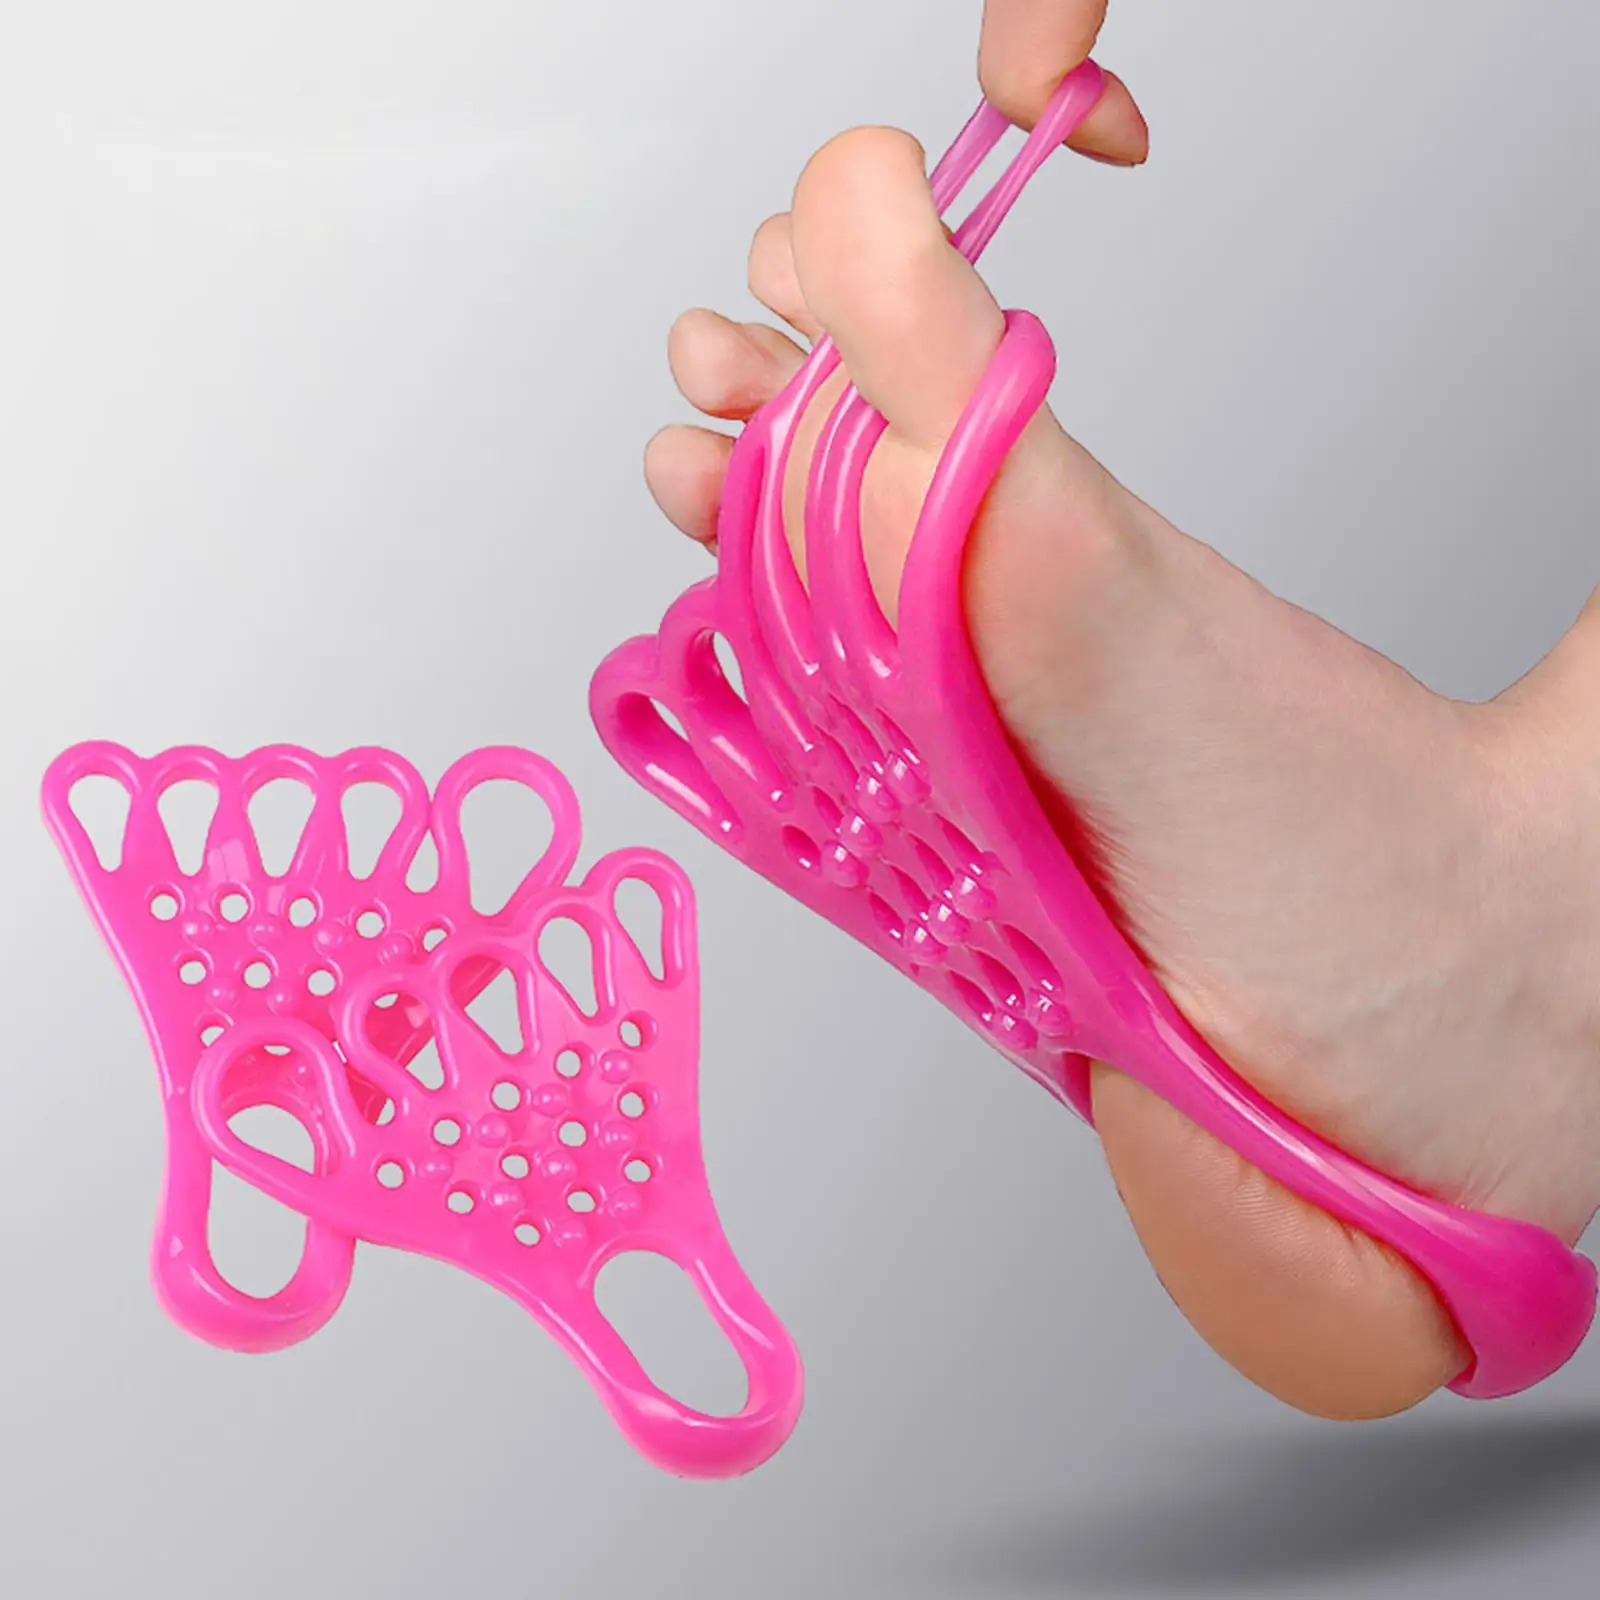 Toe Straightener Stretcher Toe Separators Hammer Toe Splints for Overlapping Toes Hallux Valgus Yoga Curled Toes Women Men